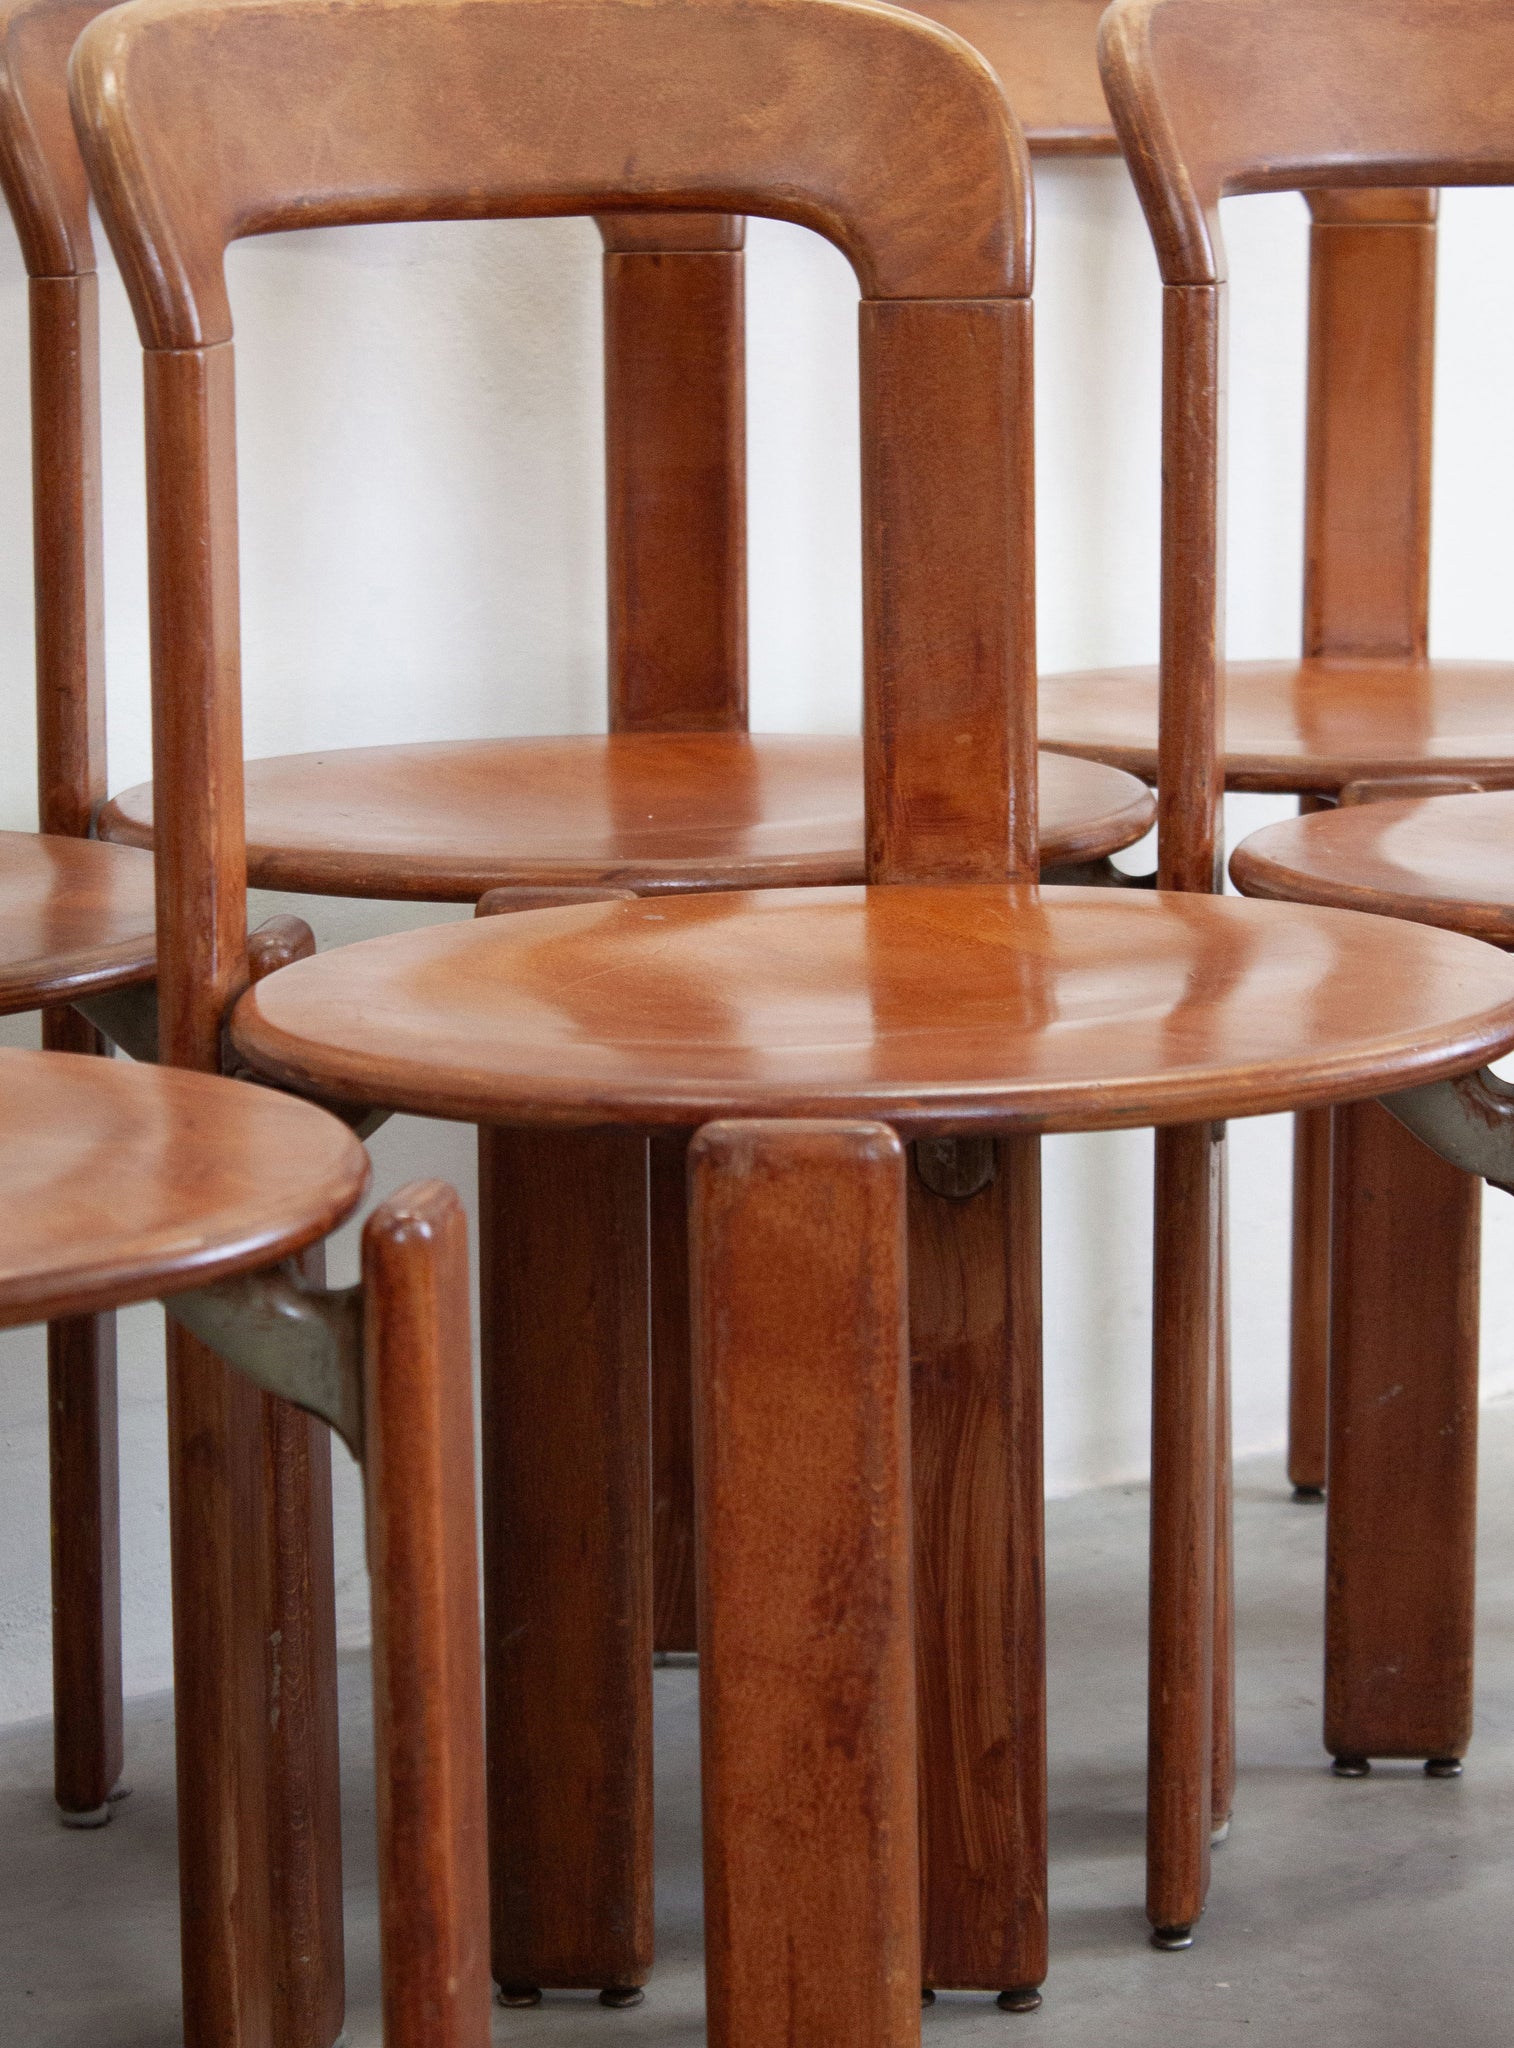 Dietiker Rey Dining Chairs by Bruno Rey (Brown)